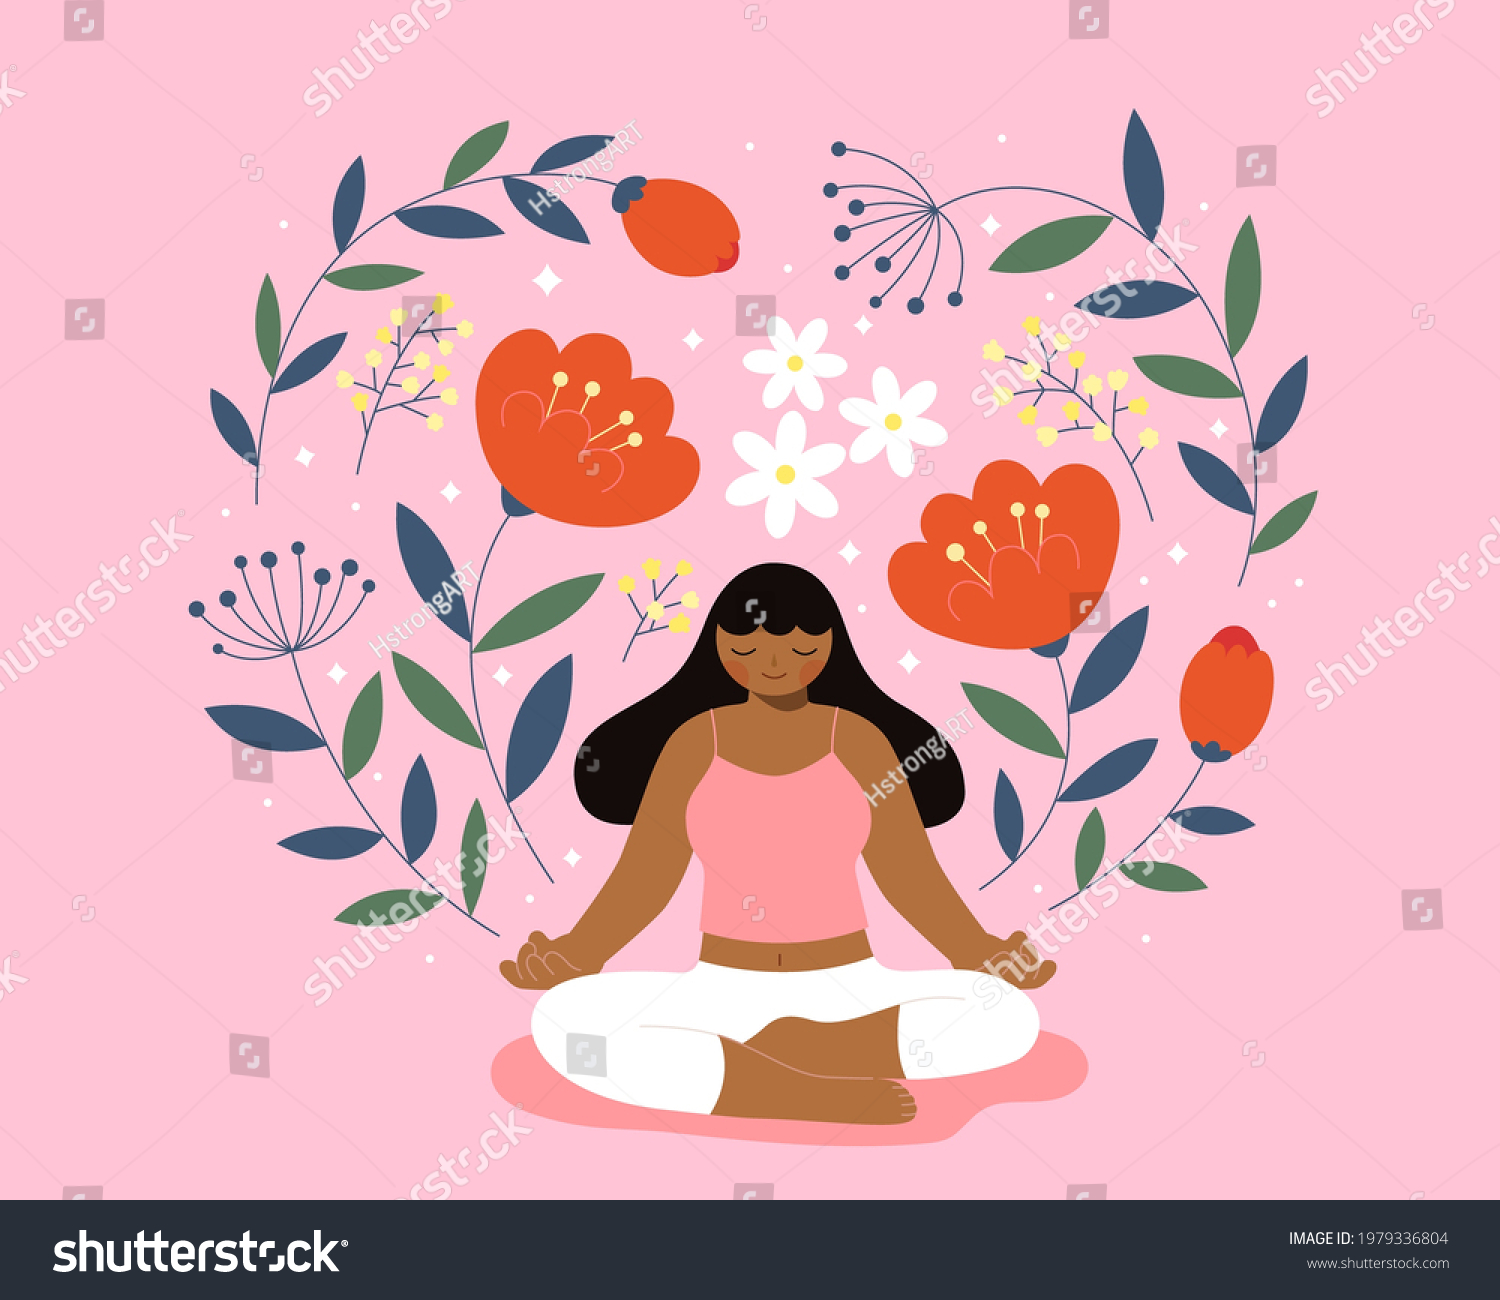 SVG of Flat illustration of an African woman meditating on floral background. Concept of meditation and mindfulness. svg